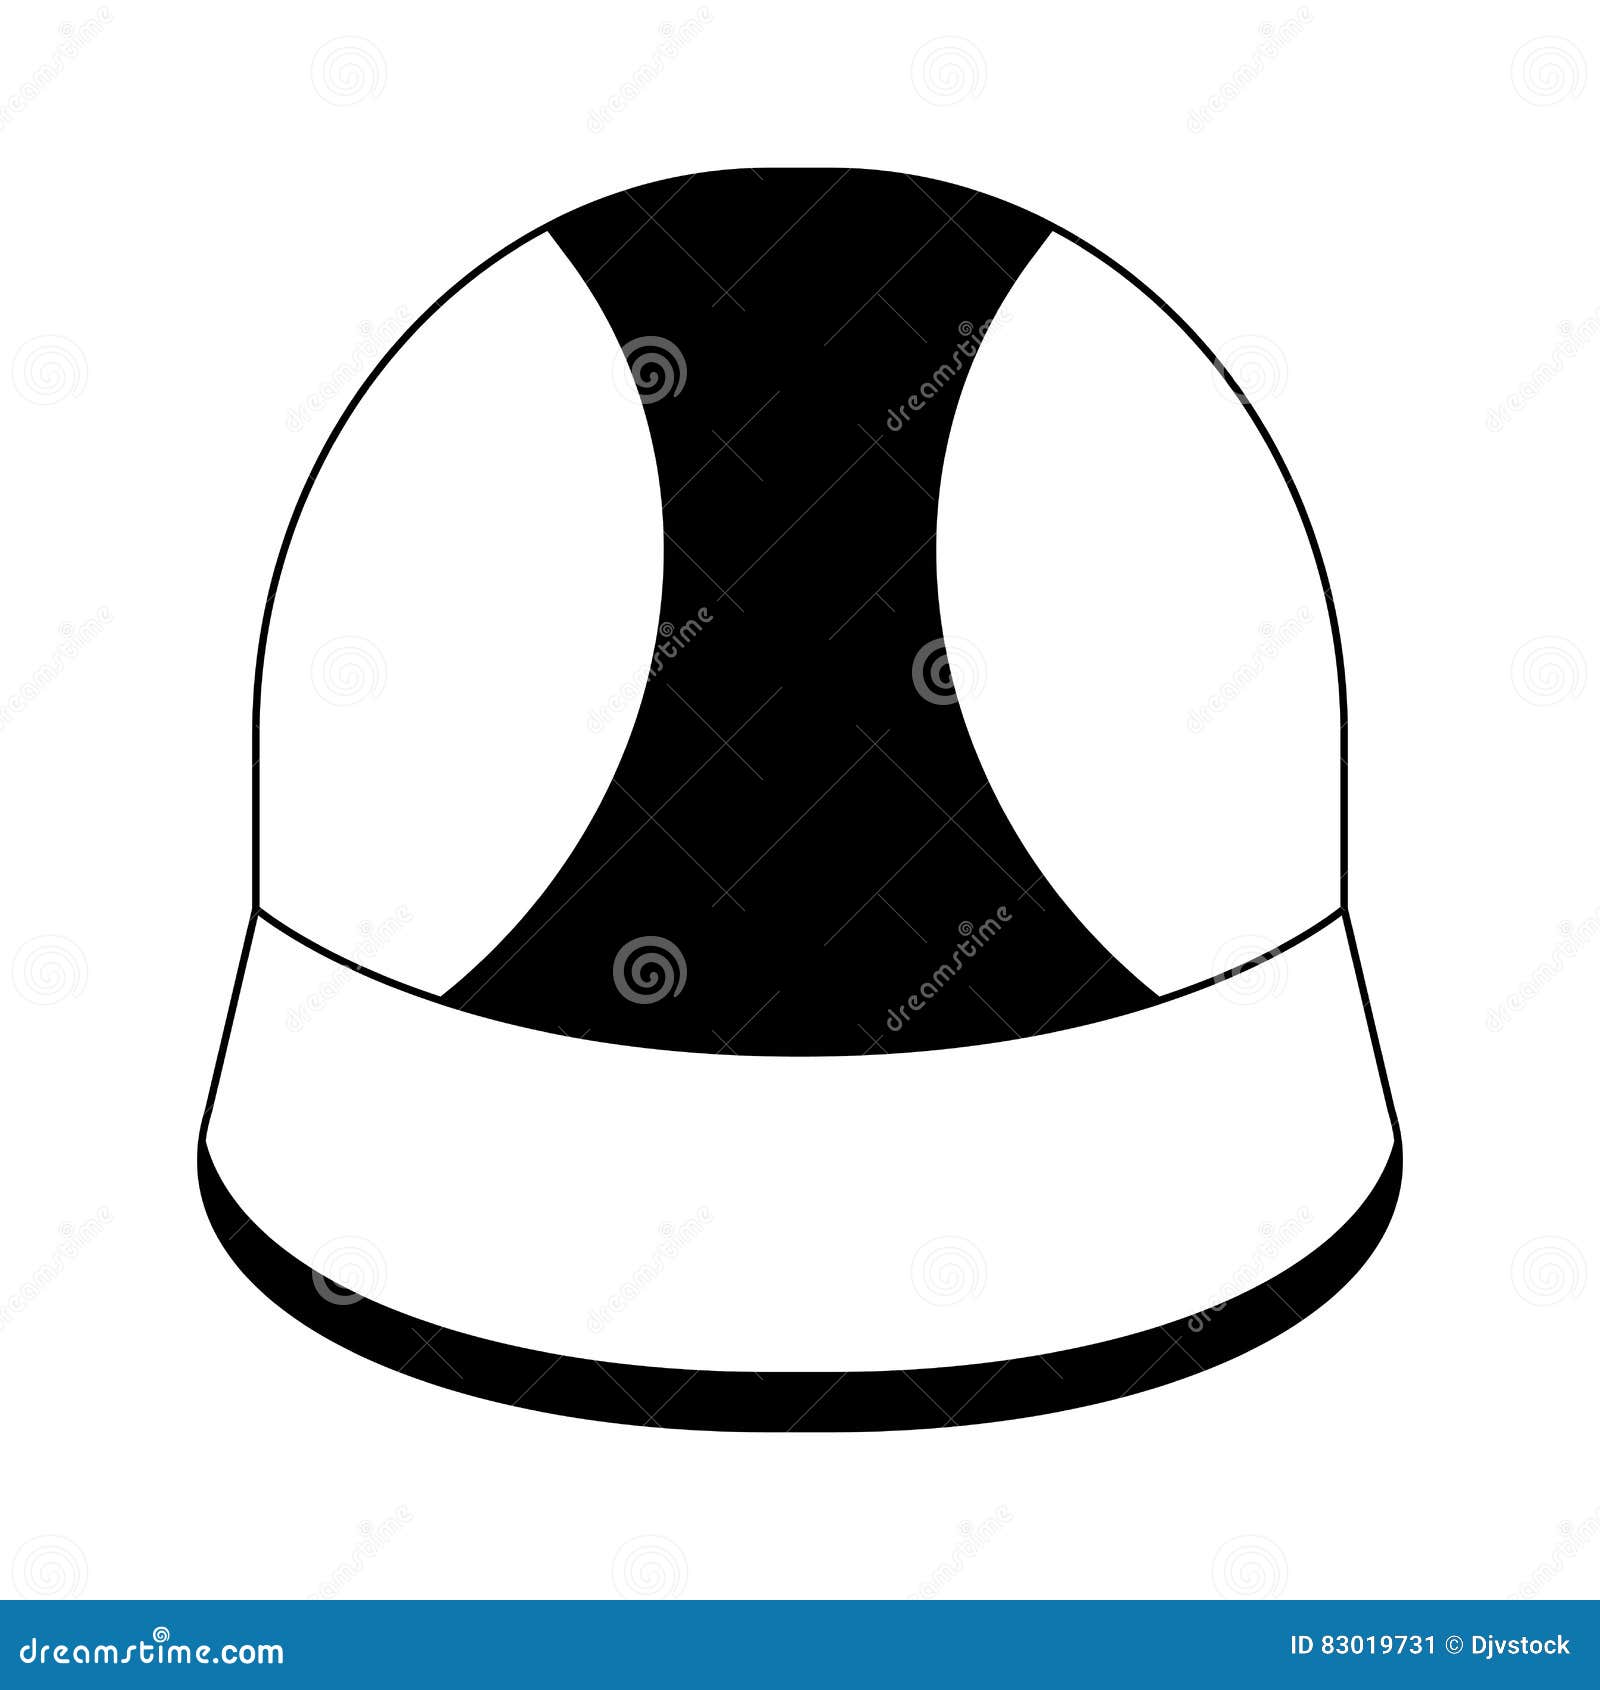 Worker construction helmet stock illustration. Illustration of workman ...